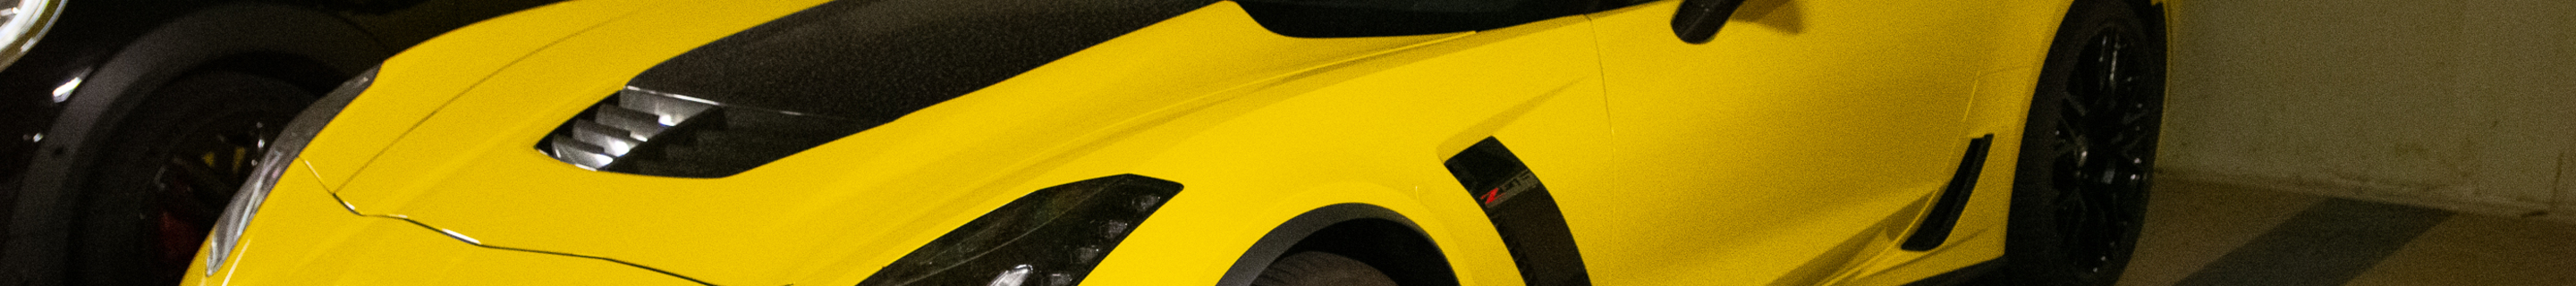 Chevrolet Corvette C7 Z06 R Edition